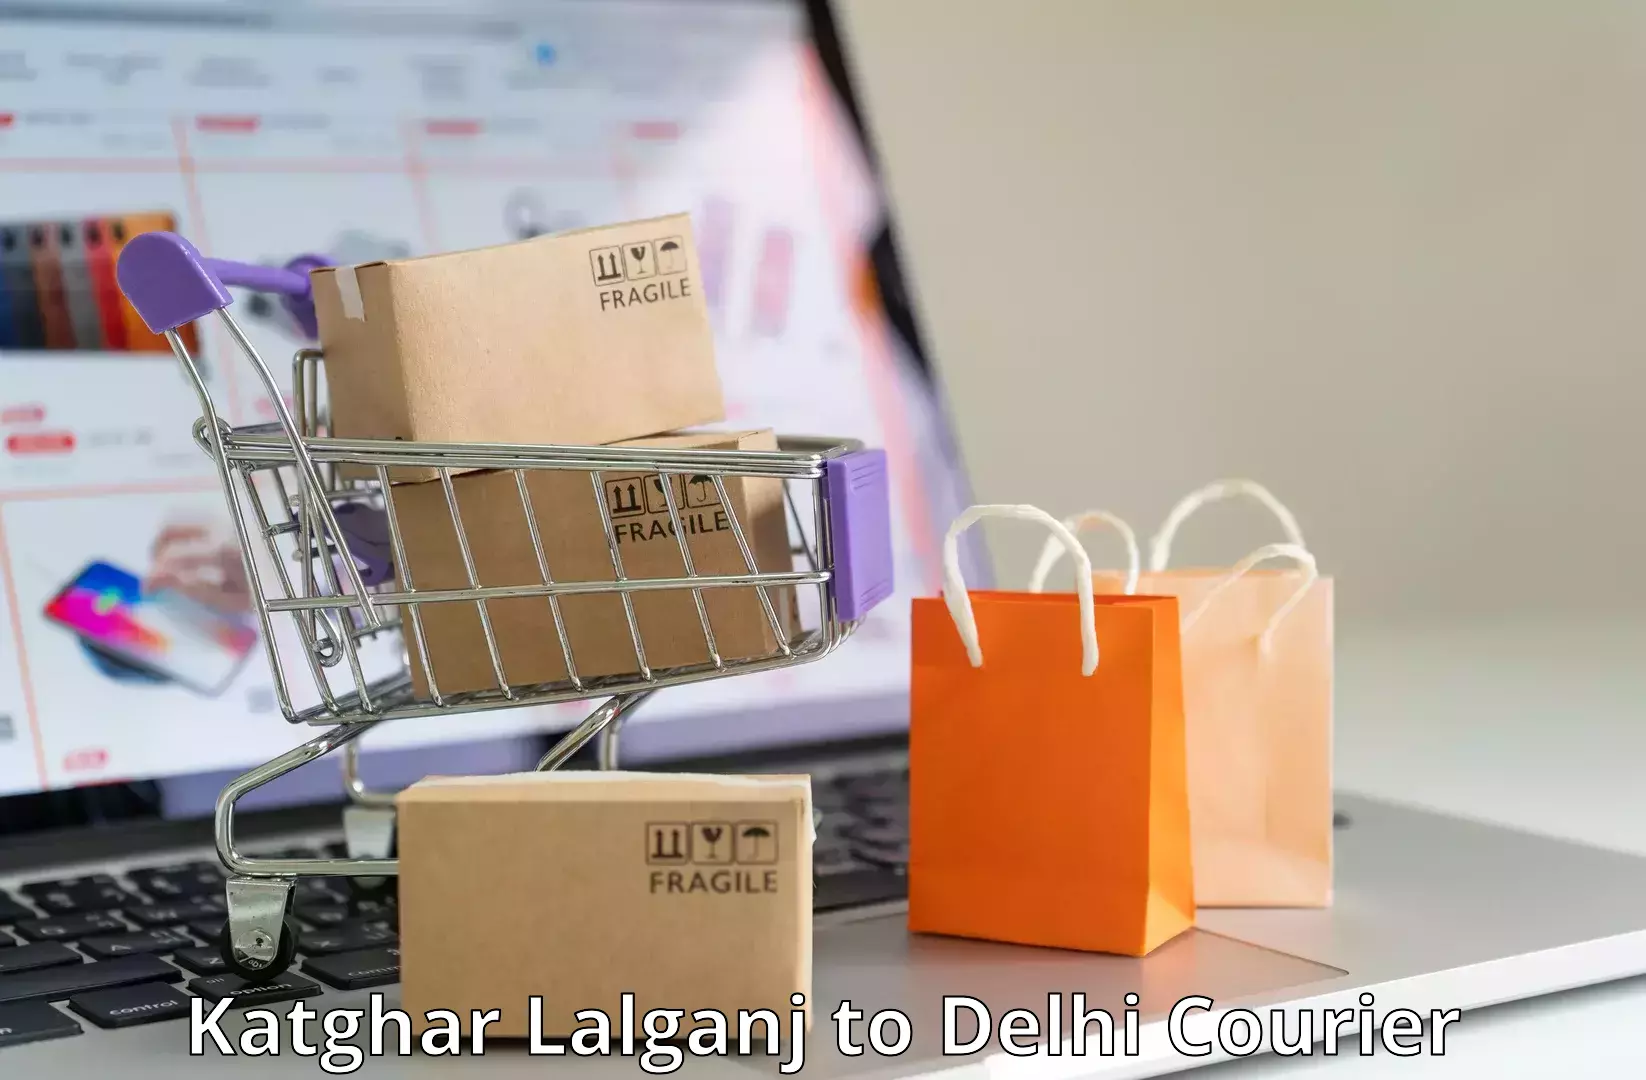 Express package delivery Katghar Lalganj to NCR